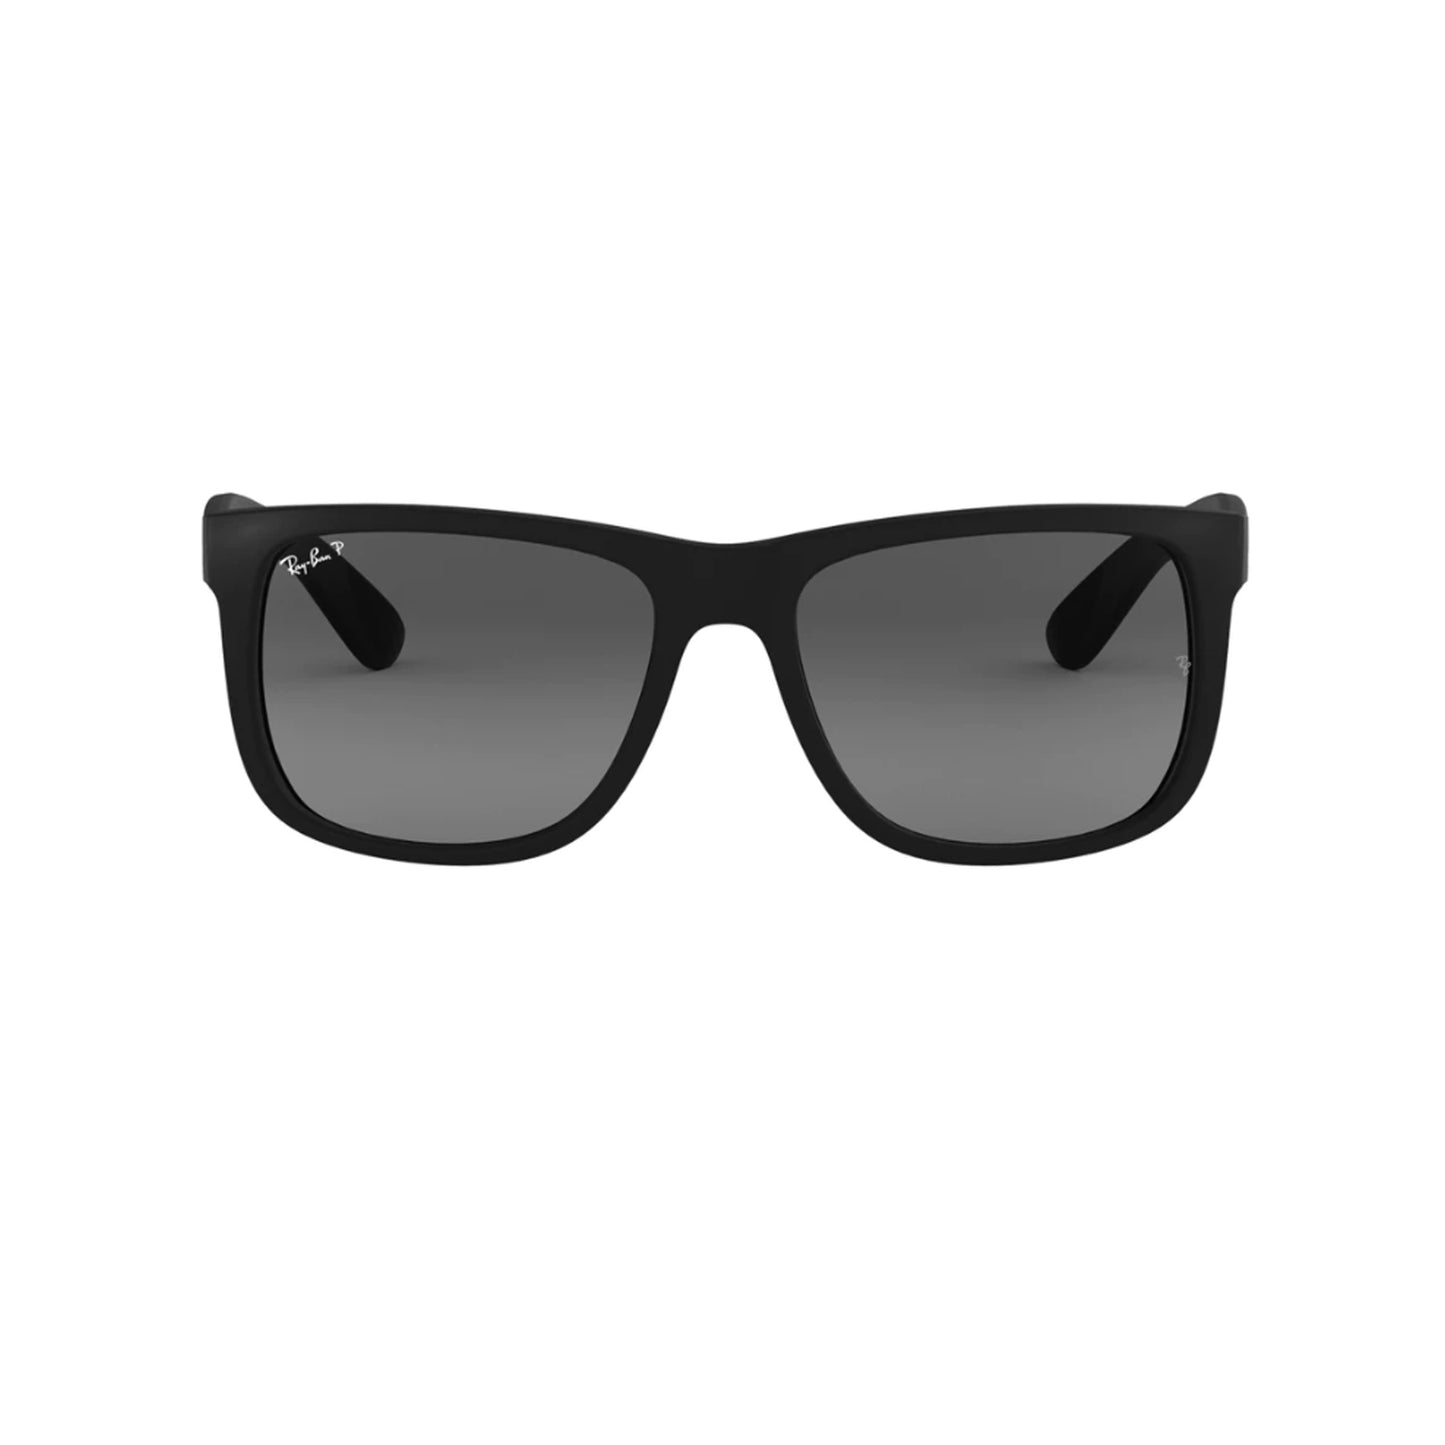 RayBan Black Square Acetate Full Rim Sunglasses RB4165F 622/8G